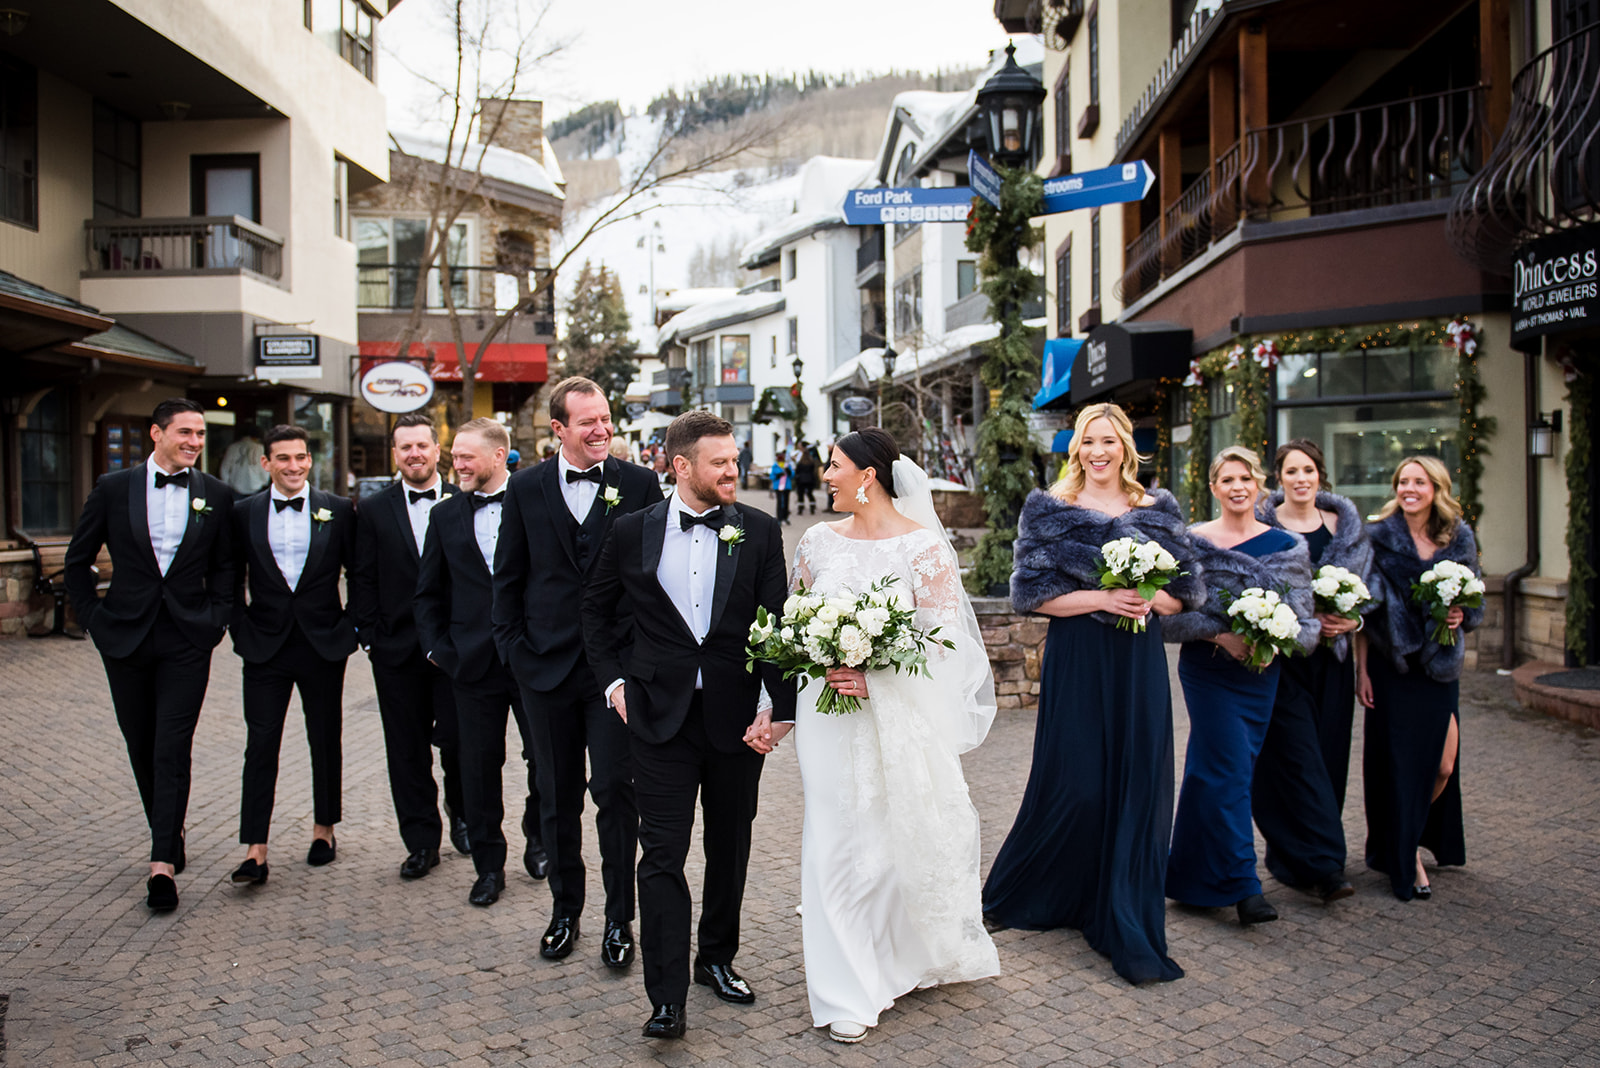 Bride and groom lead their wedding party walking through Vail Village in Colorado.